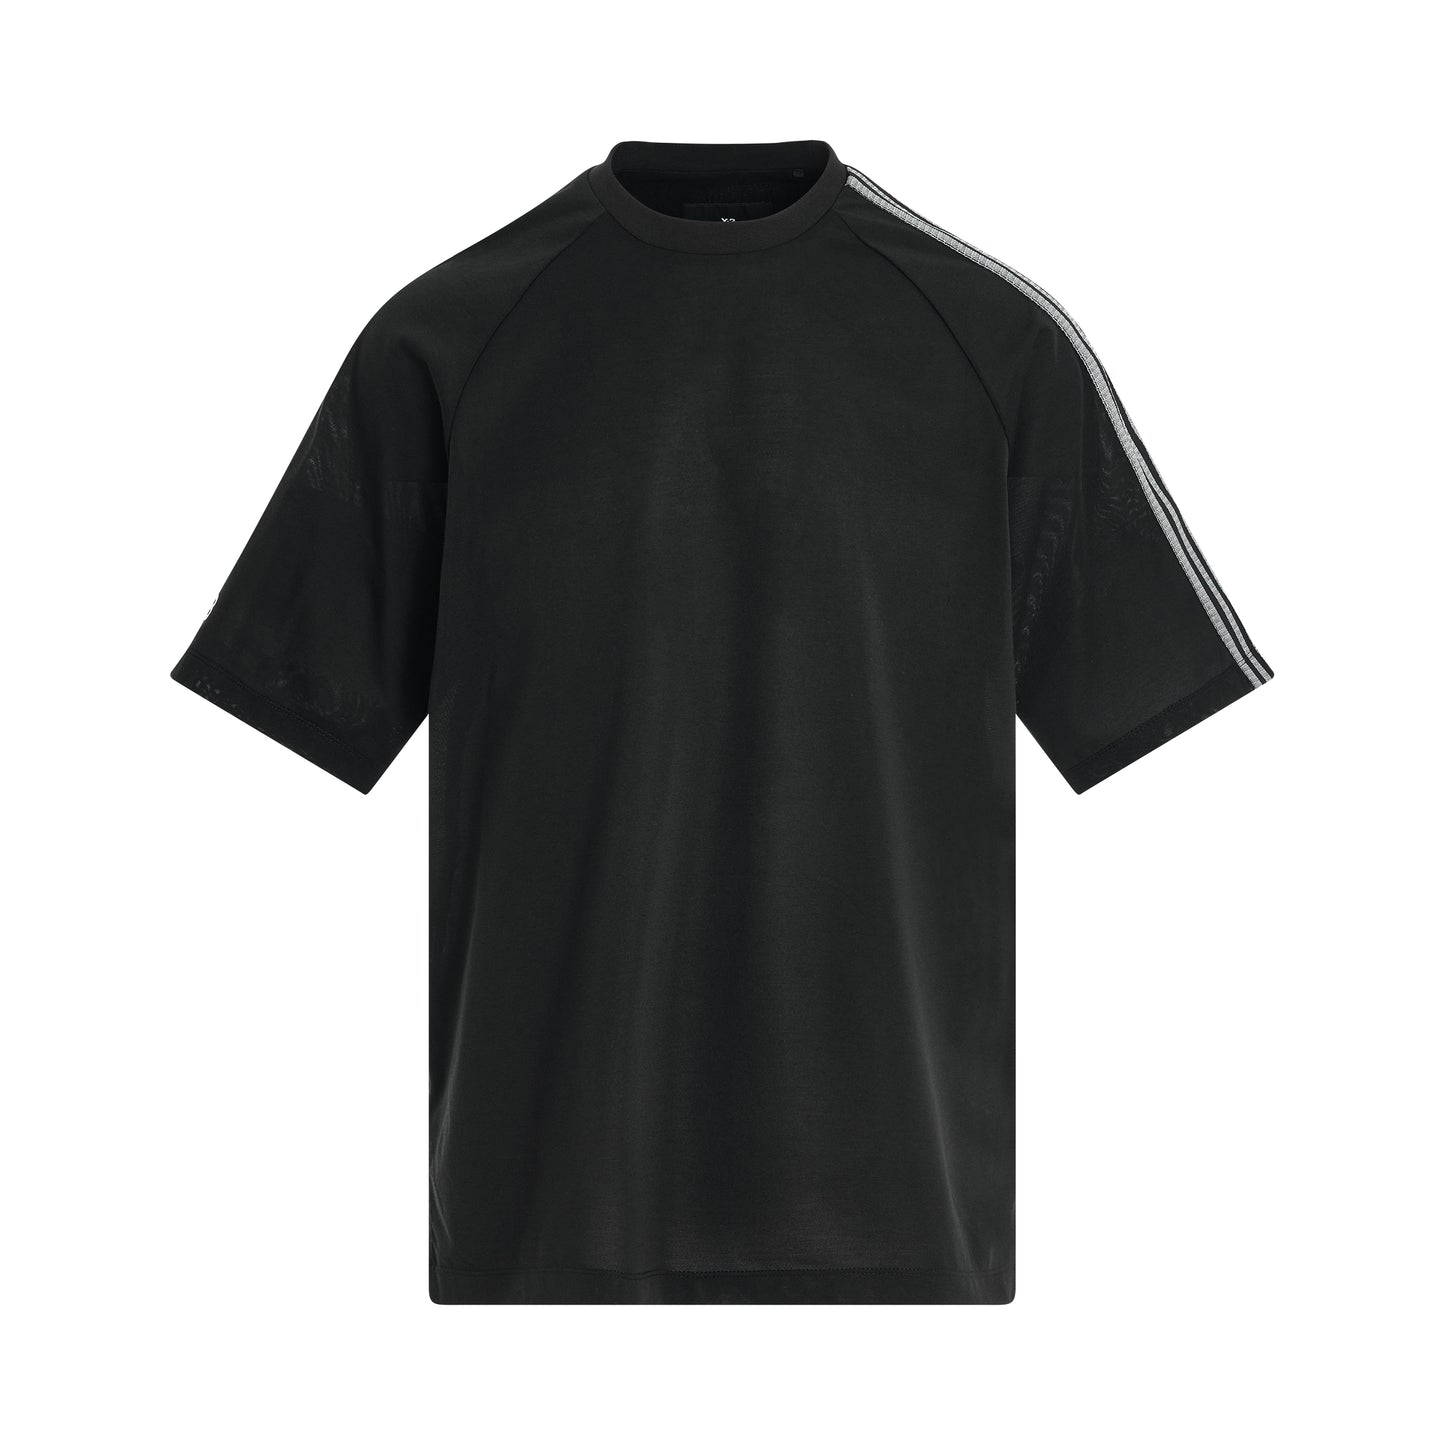 3 Stripe T-Shirt in Black/Off White